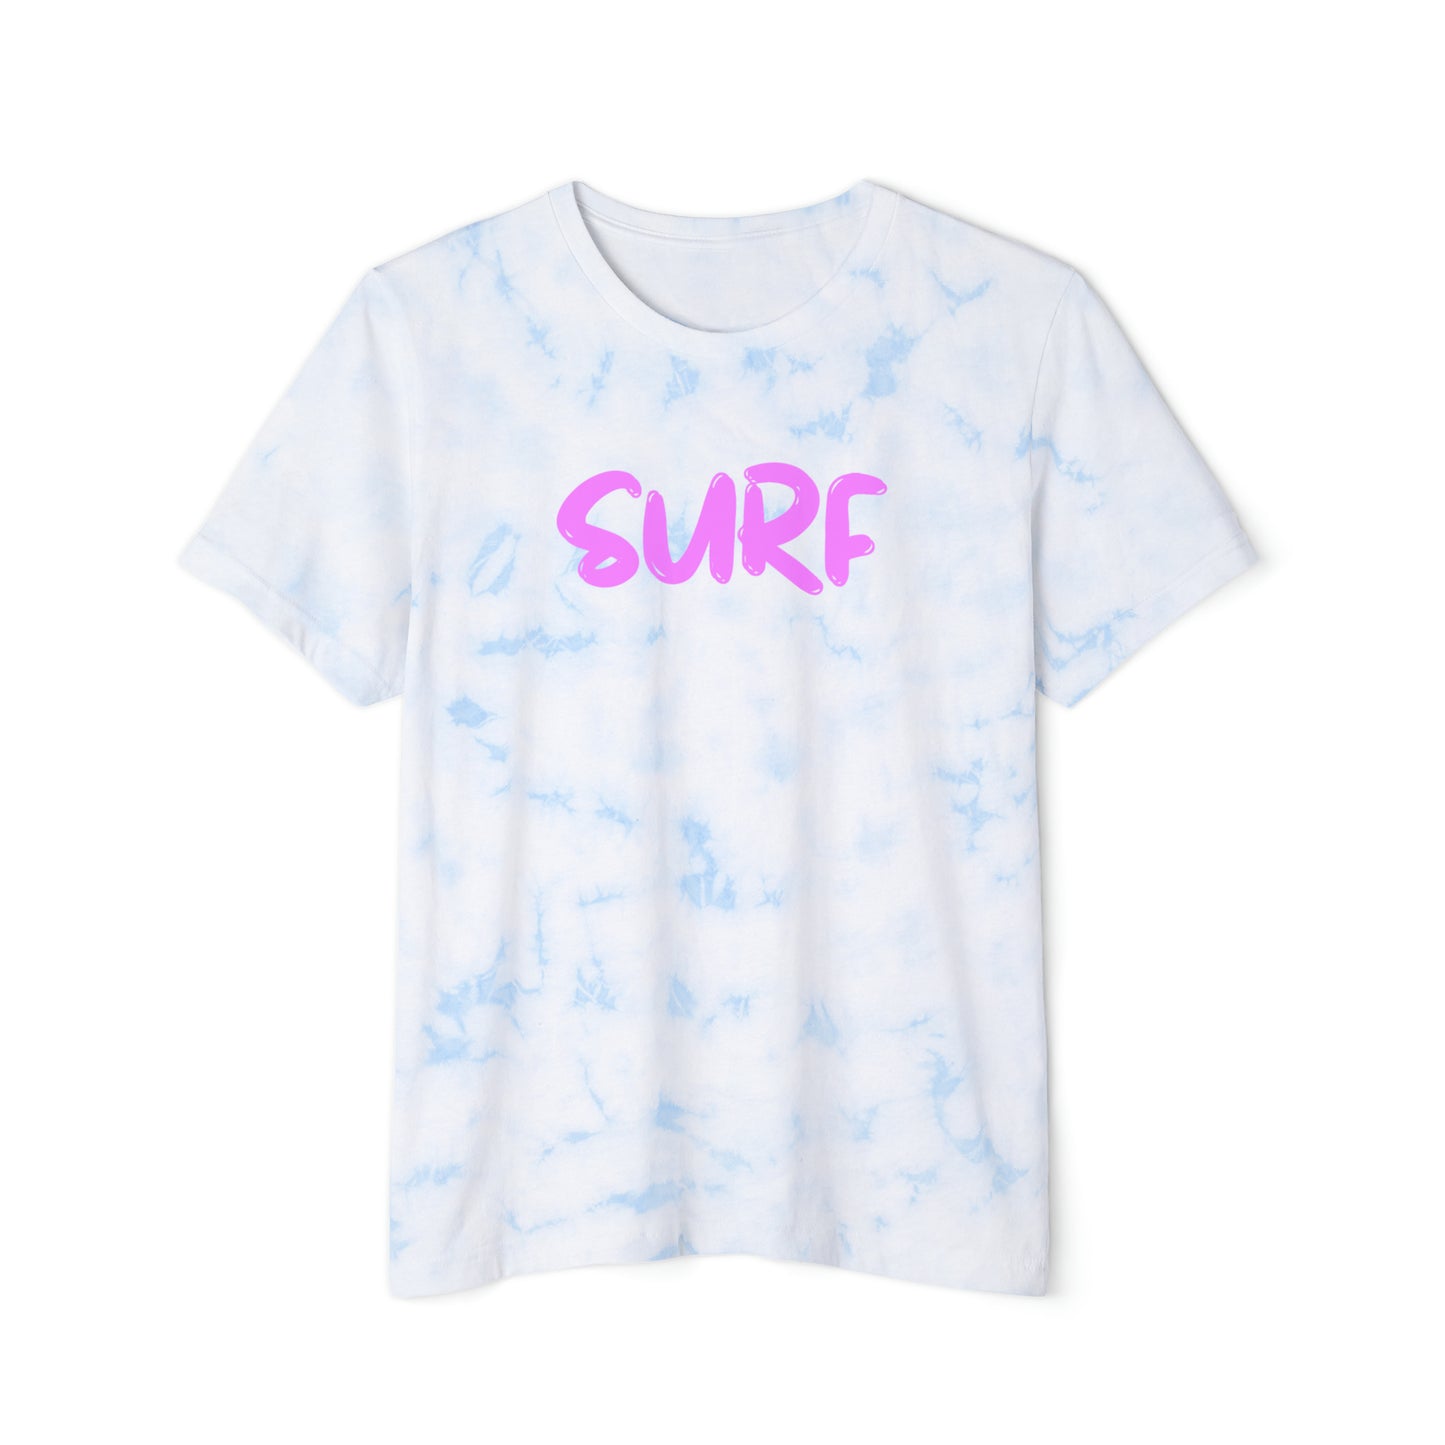 SURF, Unisex FWD Fashion Tie-Dyed T-Shirt